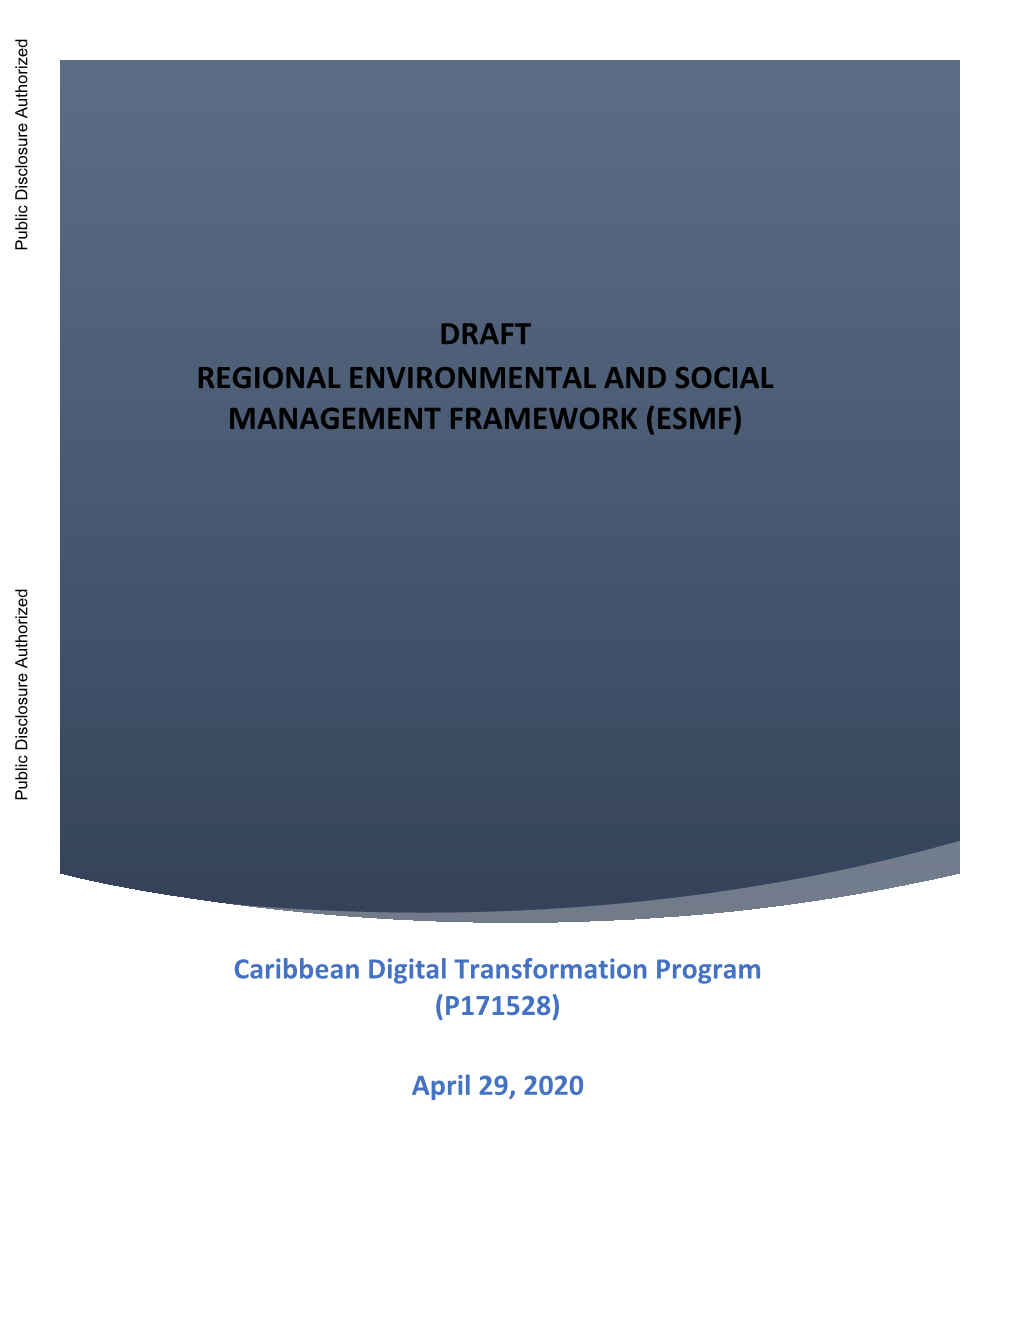 Draft Regional Environmental and Social Management Framework (Esmf)